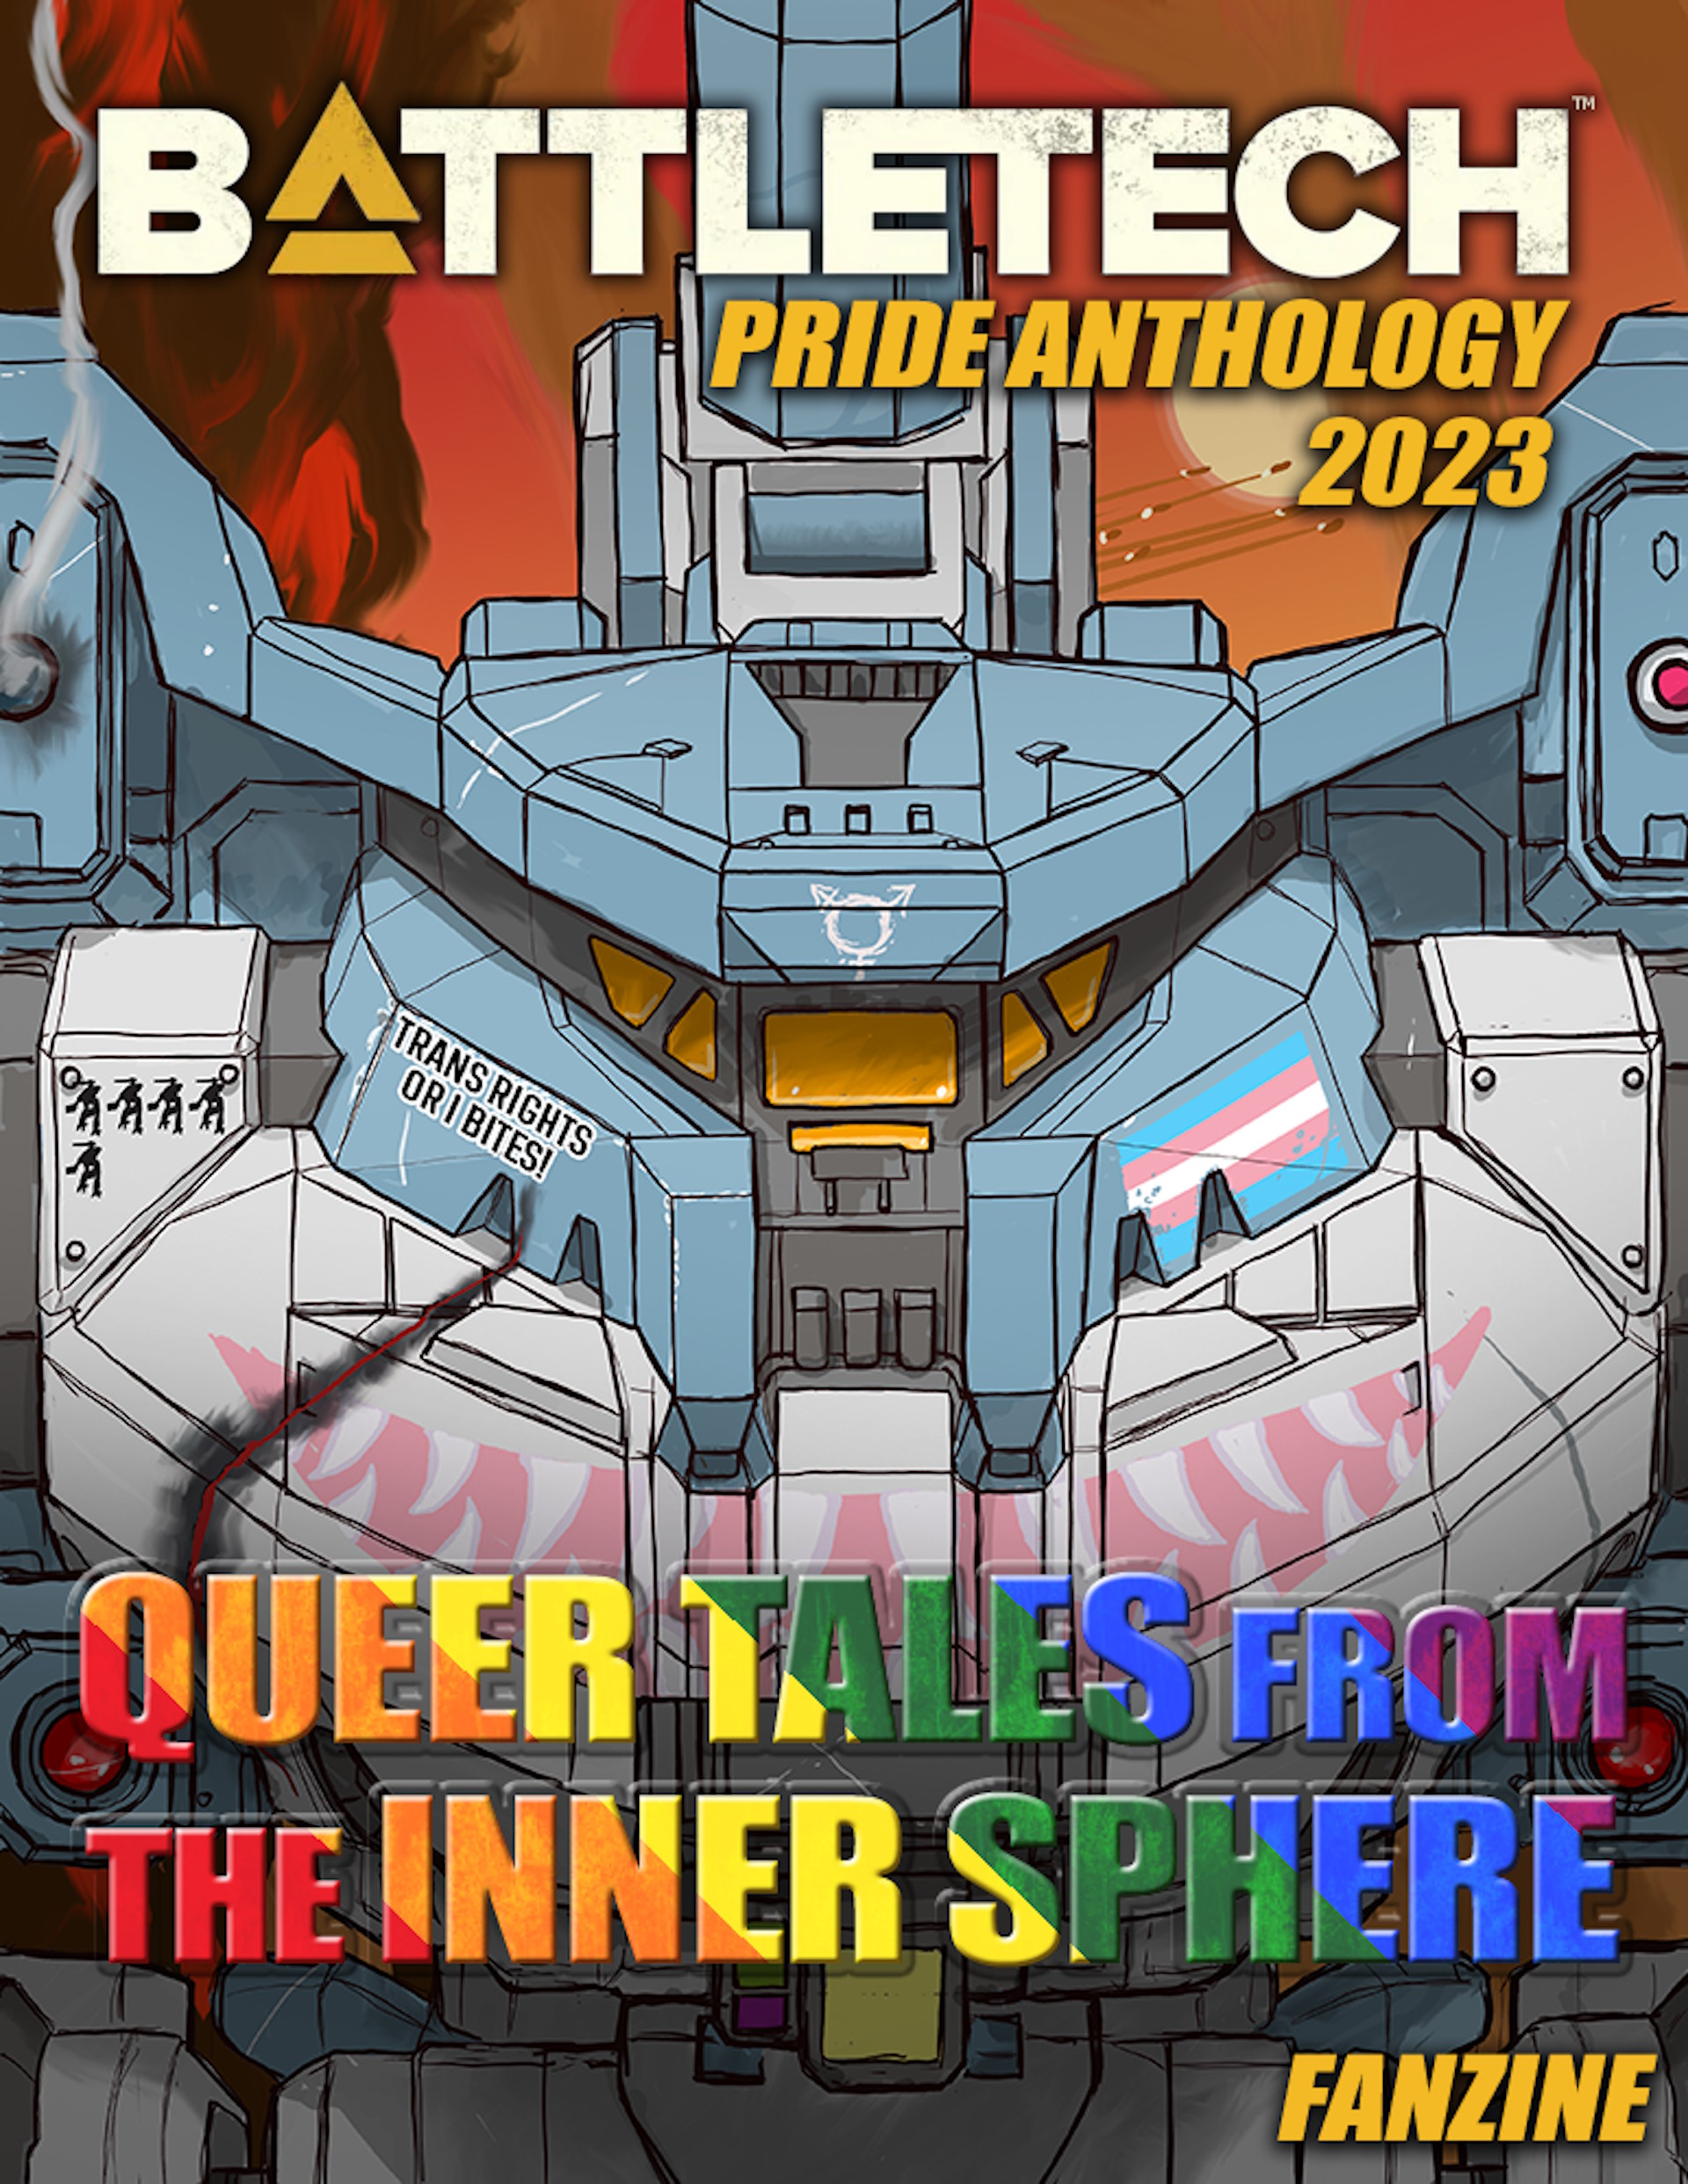 Portada de Battletech Pride Anthology 2023